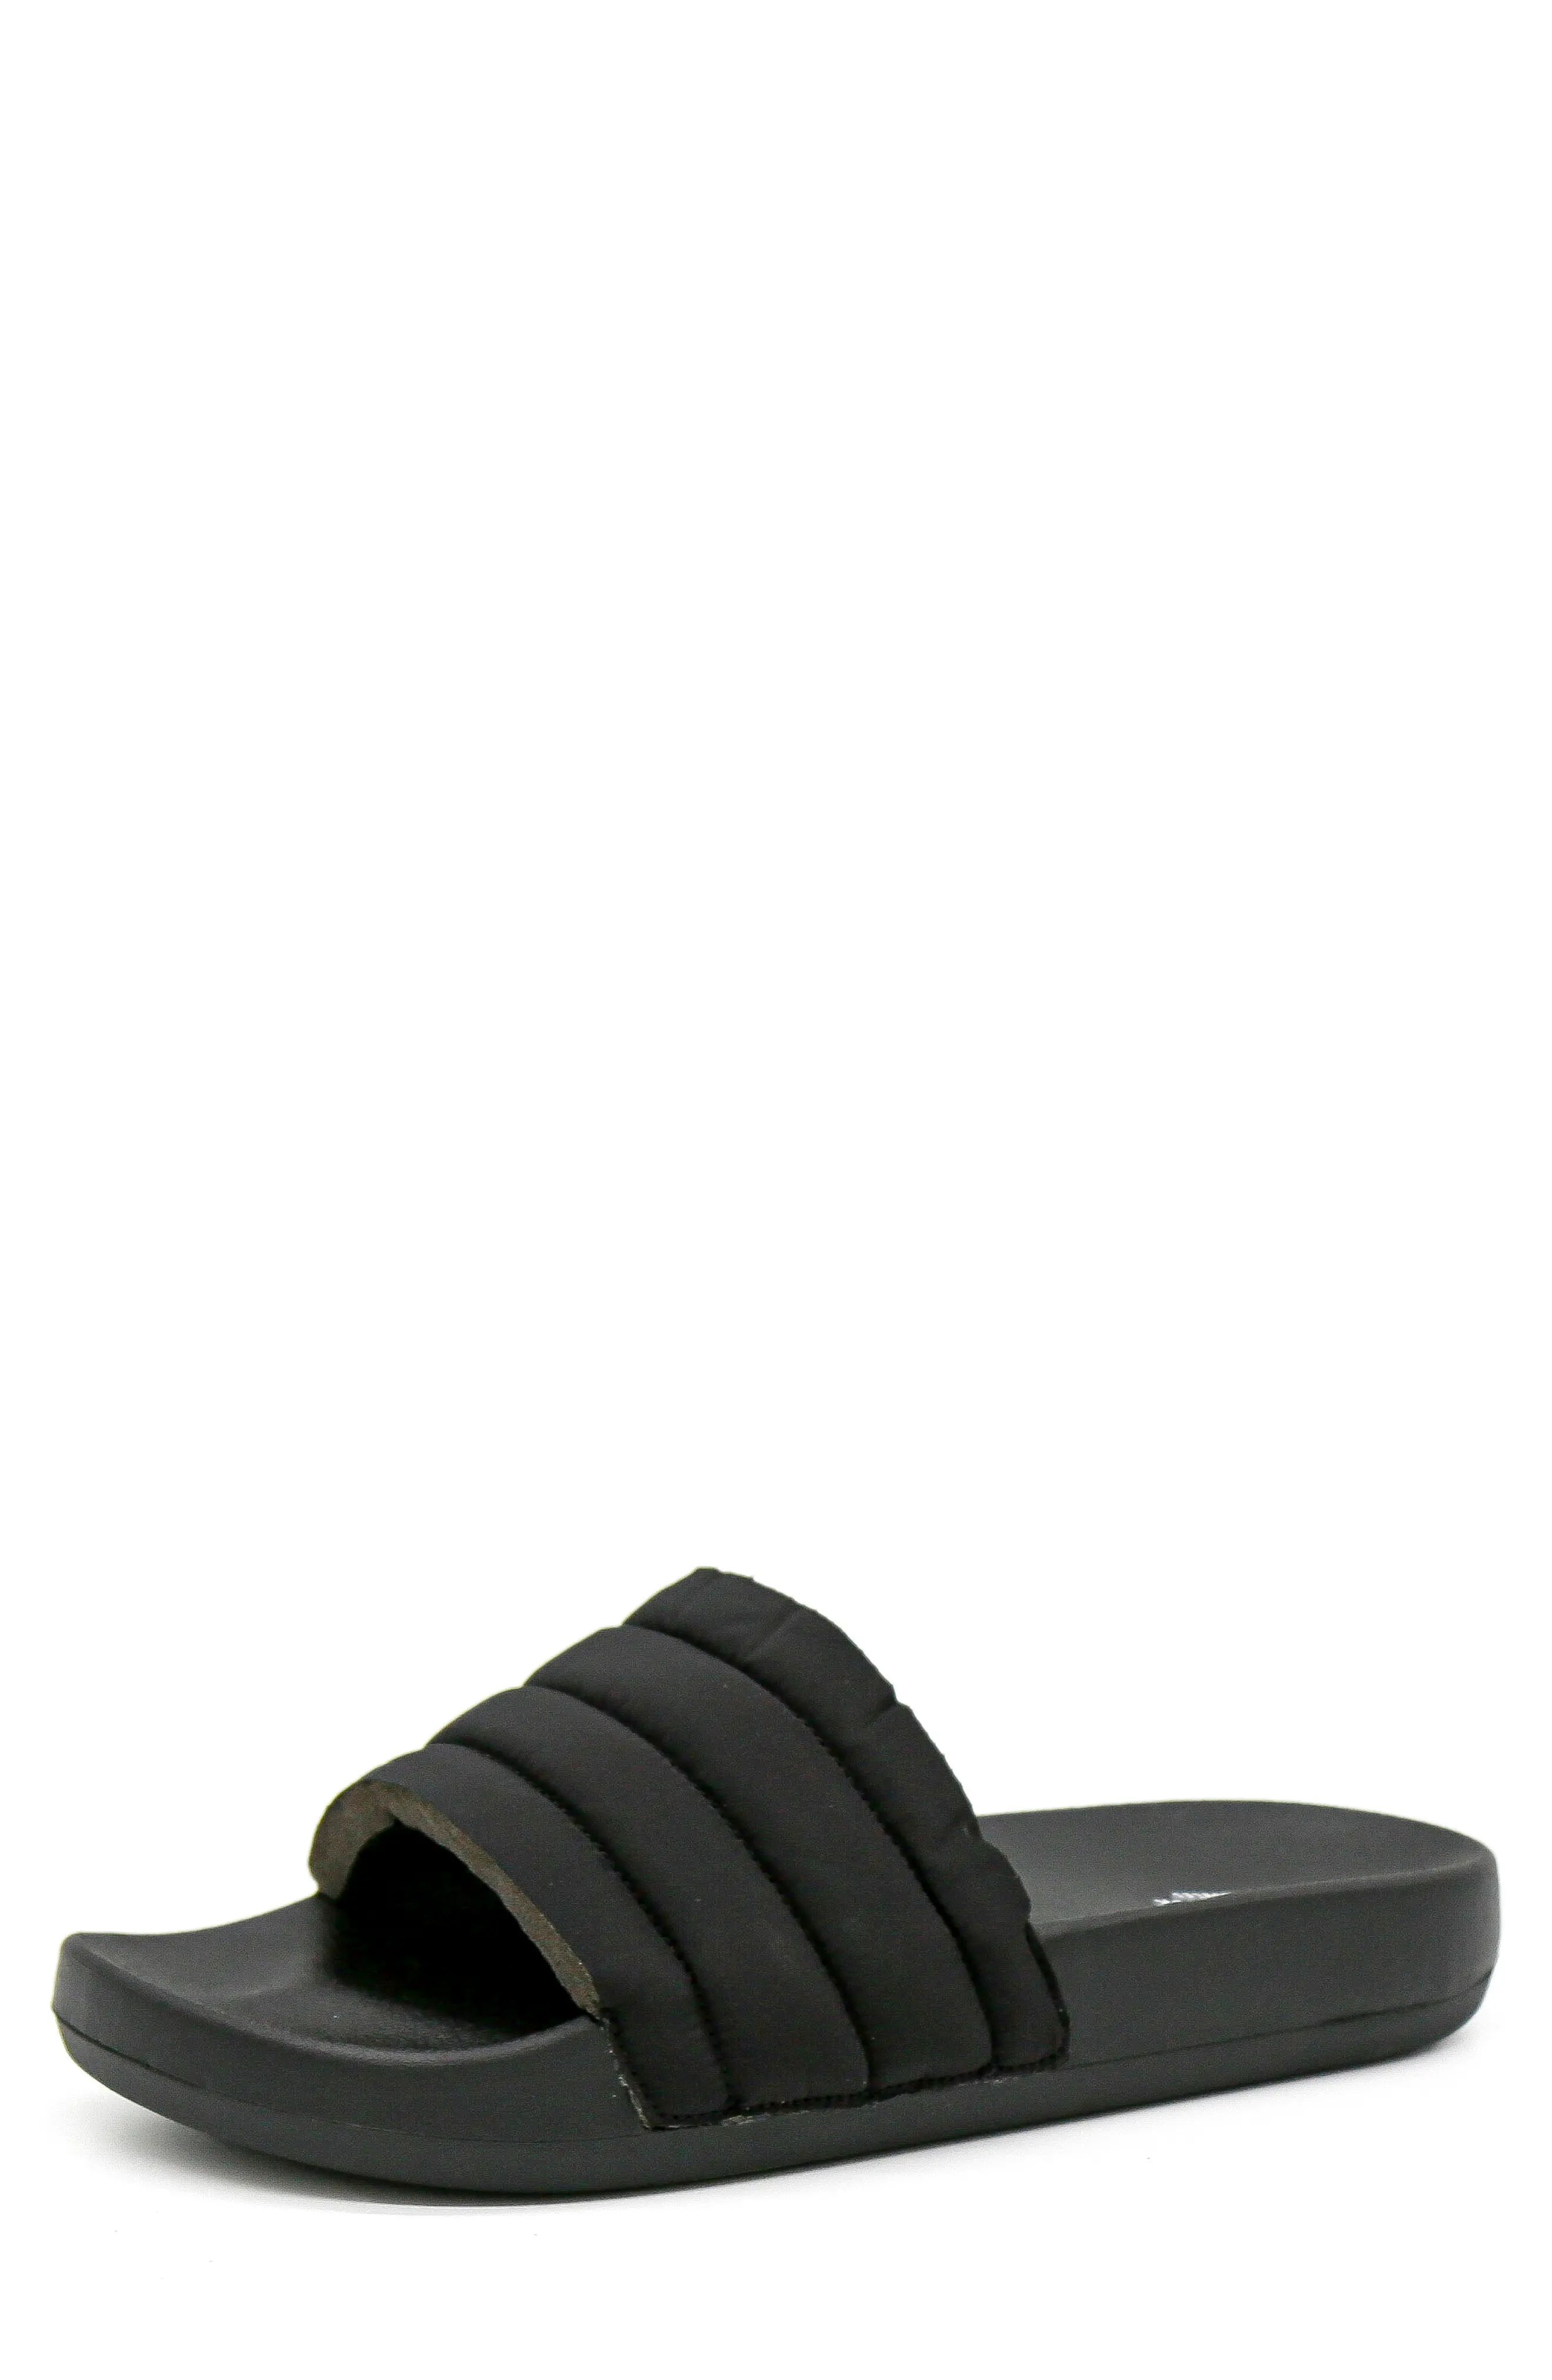 Brandblack Alix Kashiba Slide Sandal in Basic Black at Nordstrom, Size 8 | Nordstrom